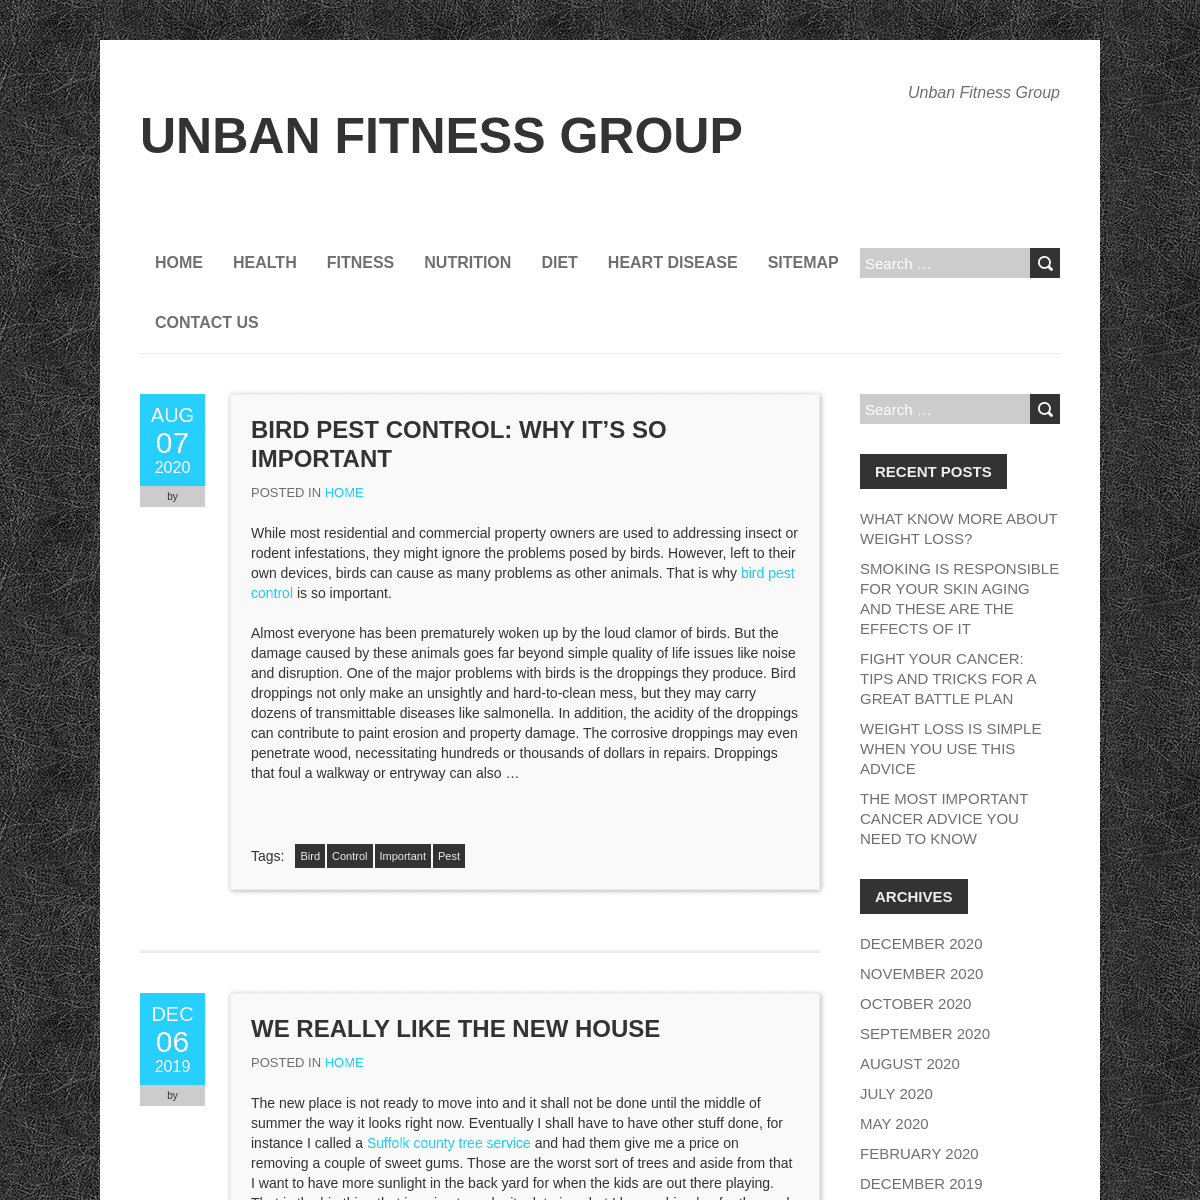 A complete backup of https://urbanfitnessgroup.com